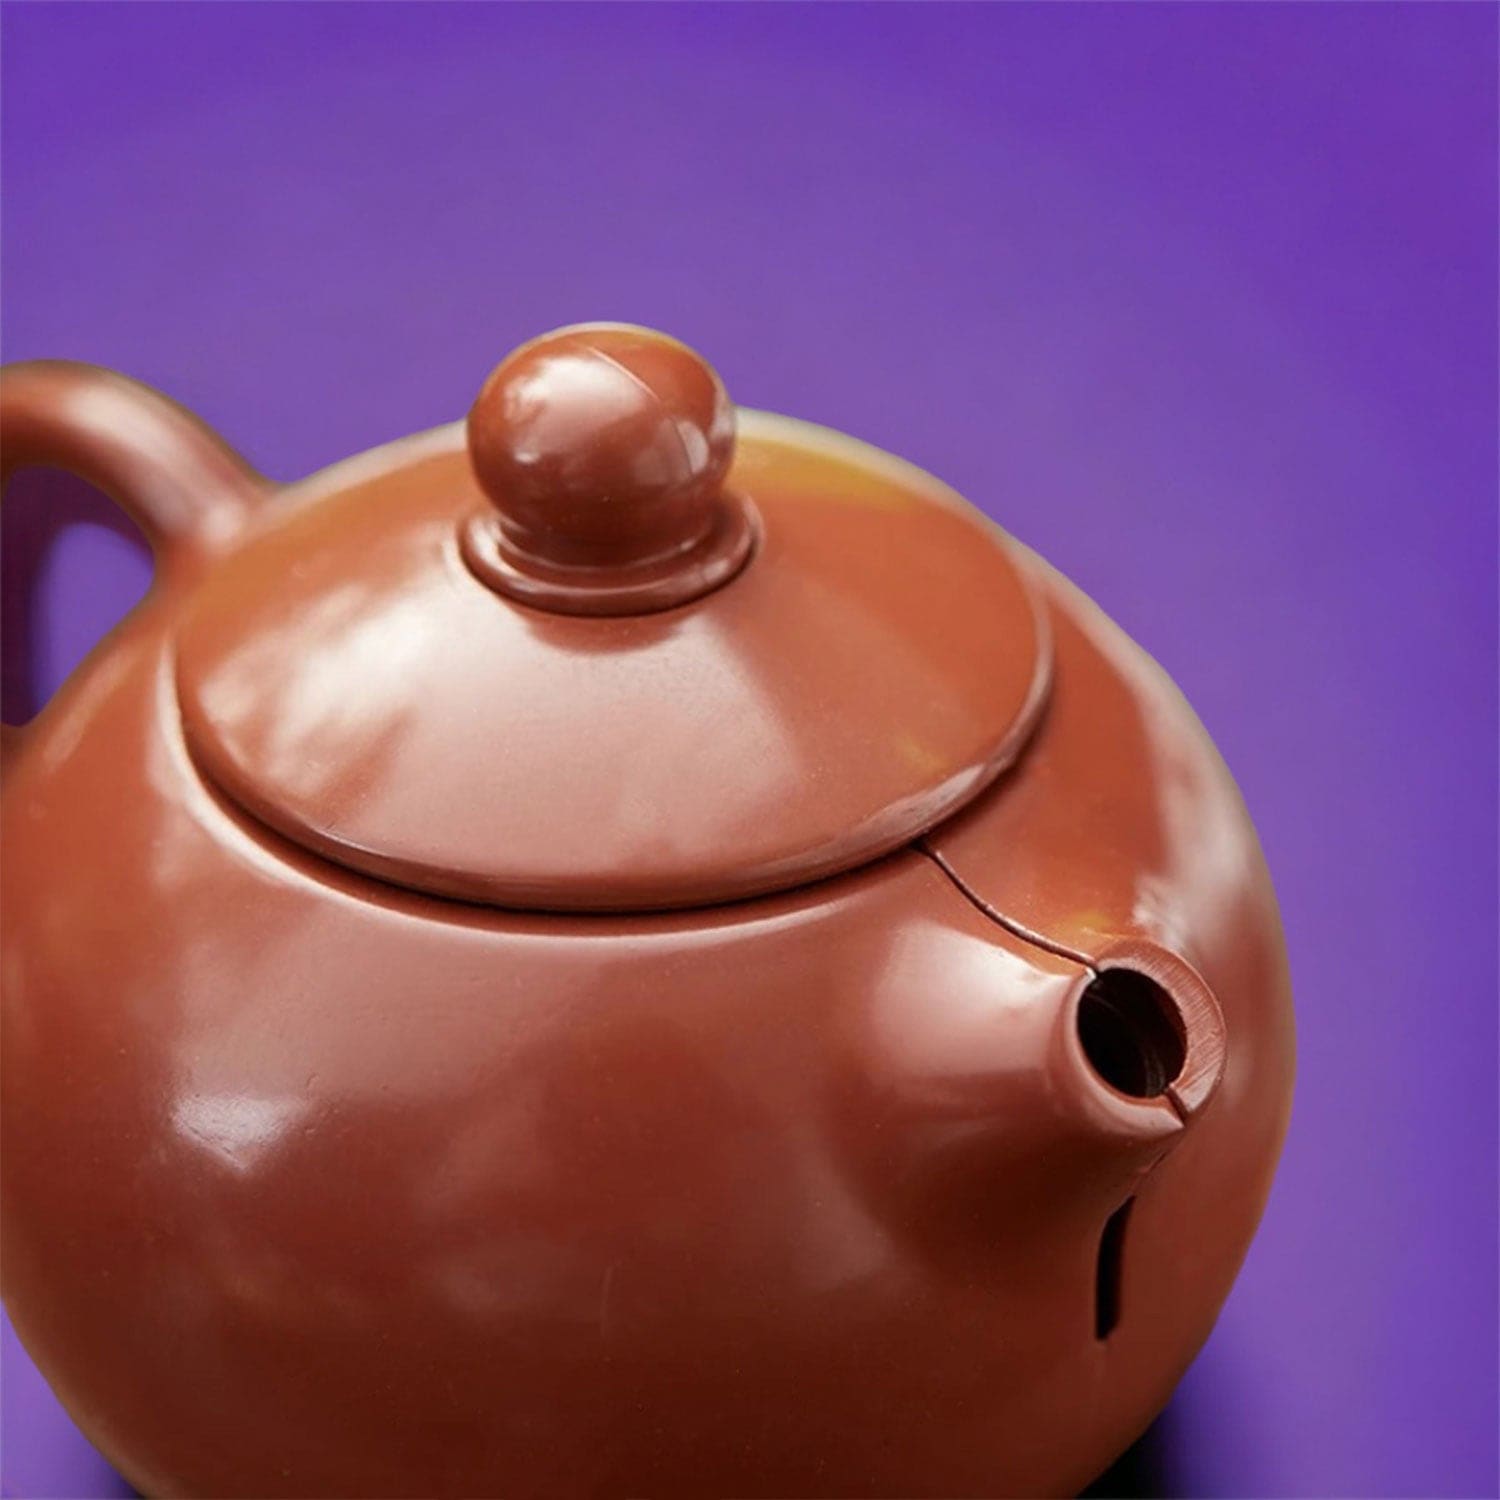 Teapot Novelty Lighter 0623 - Q223 - Wendyjune - Xemma